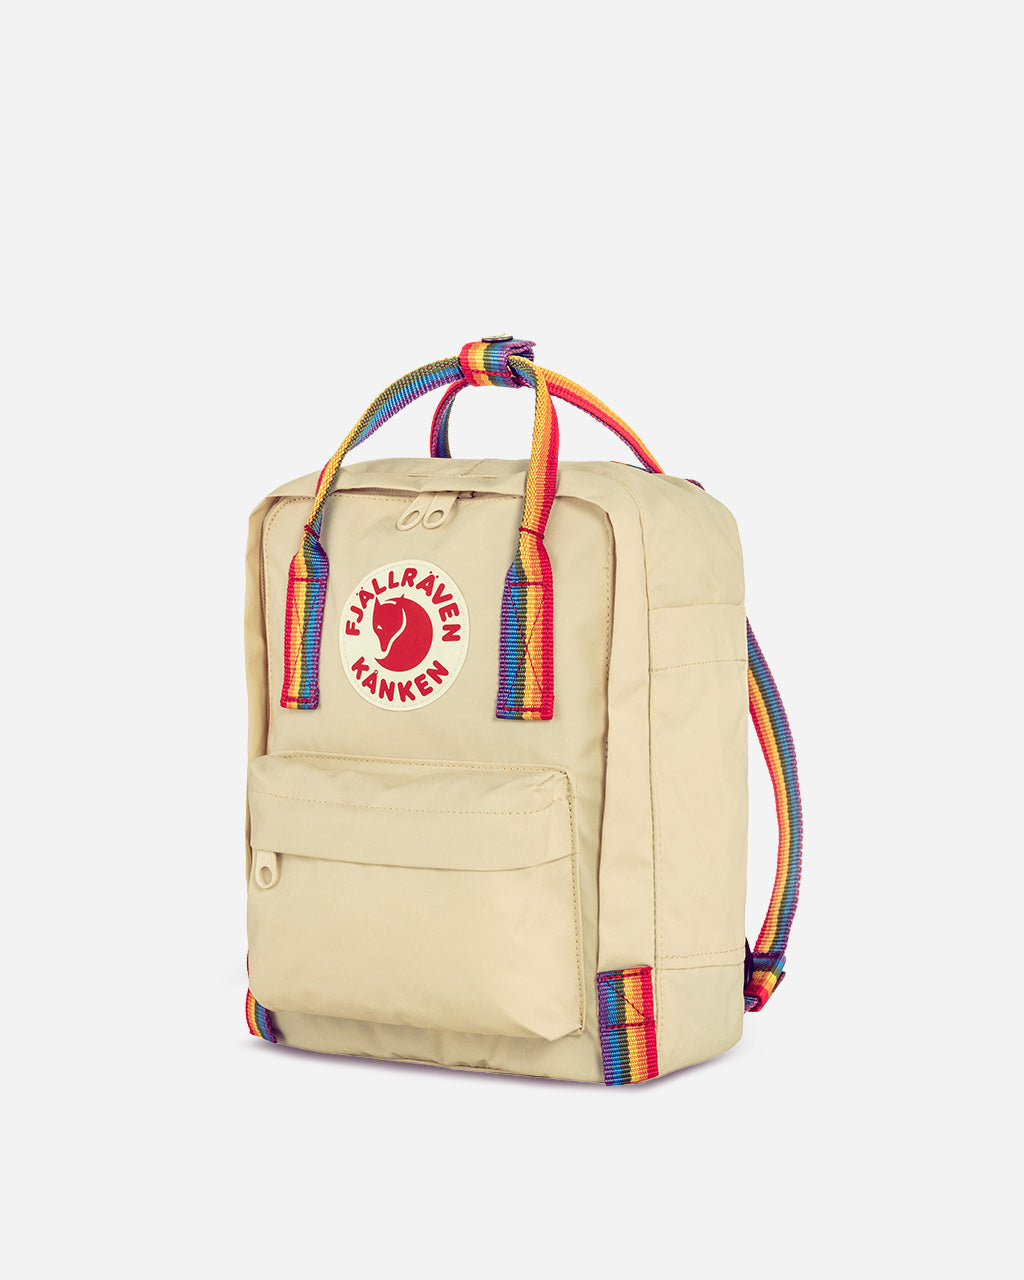 hoop Blauwe plek scheidsrechter Fjallraven Kanken Rainbow Mini Backpack: Embrace Diversity and Joy –  BrandsWalk